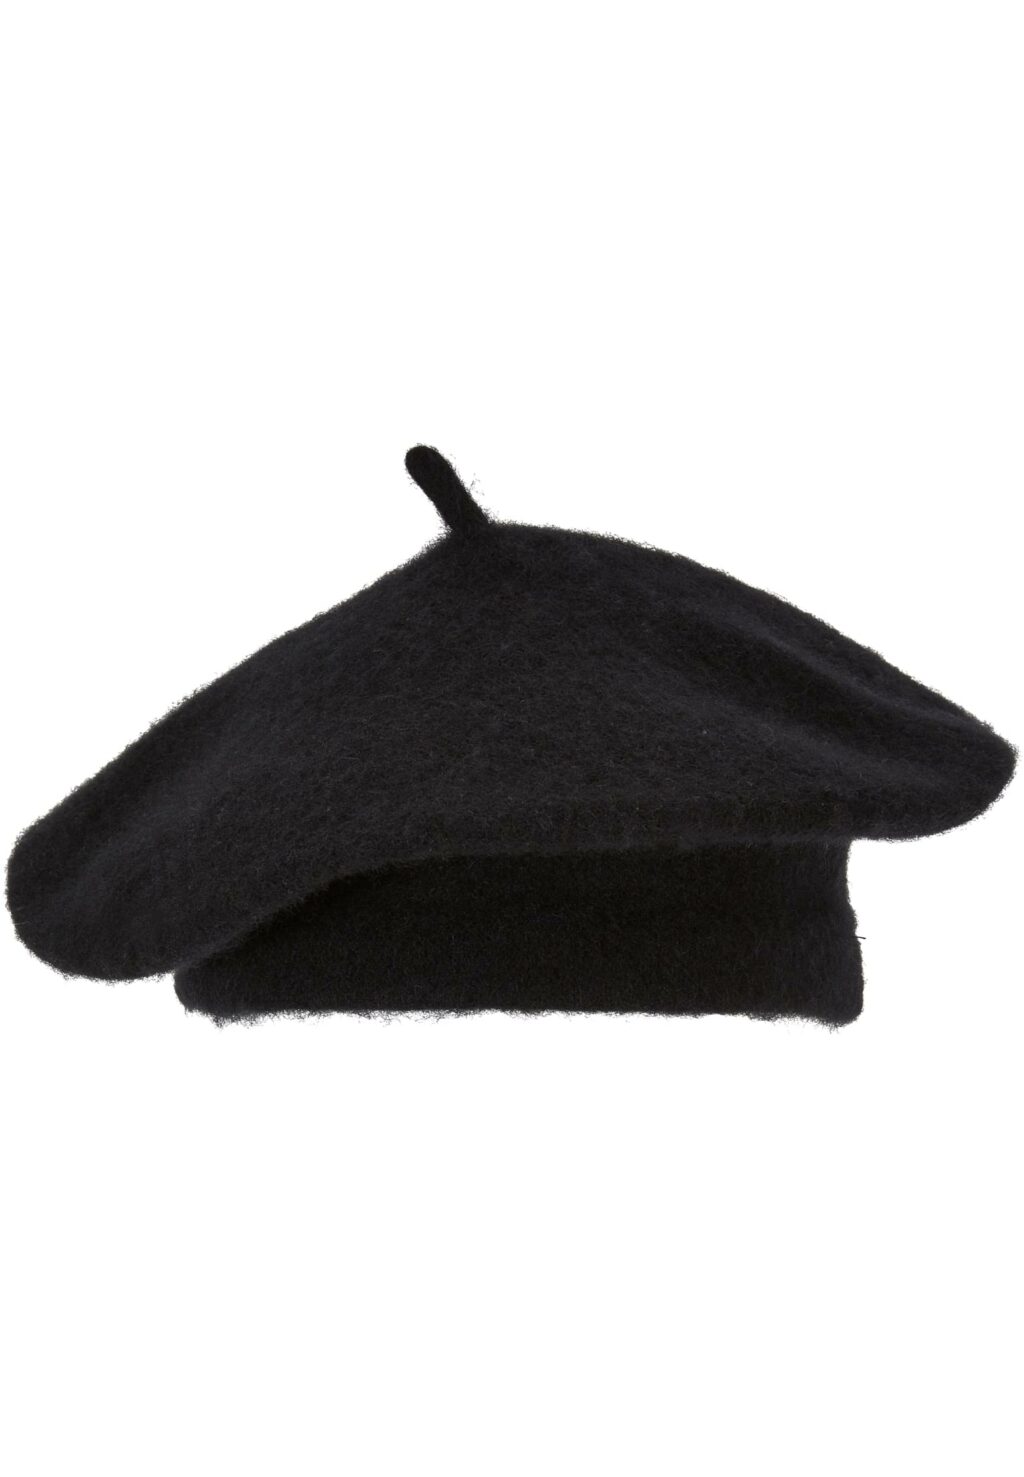 Beret Hat black one TB6531